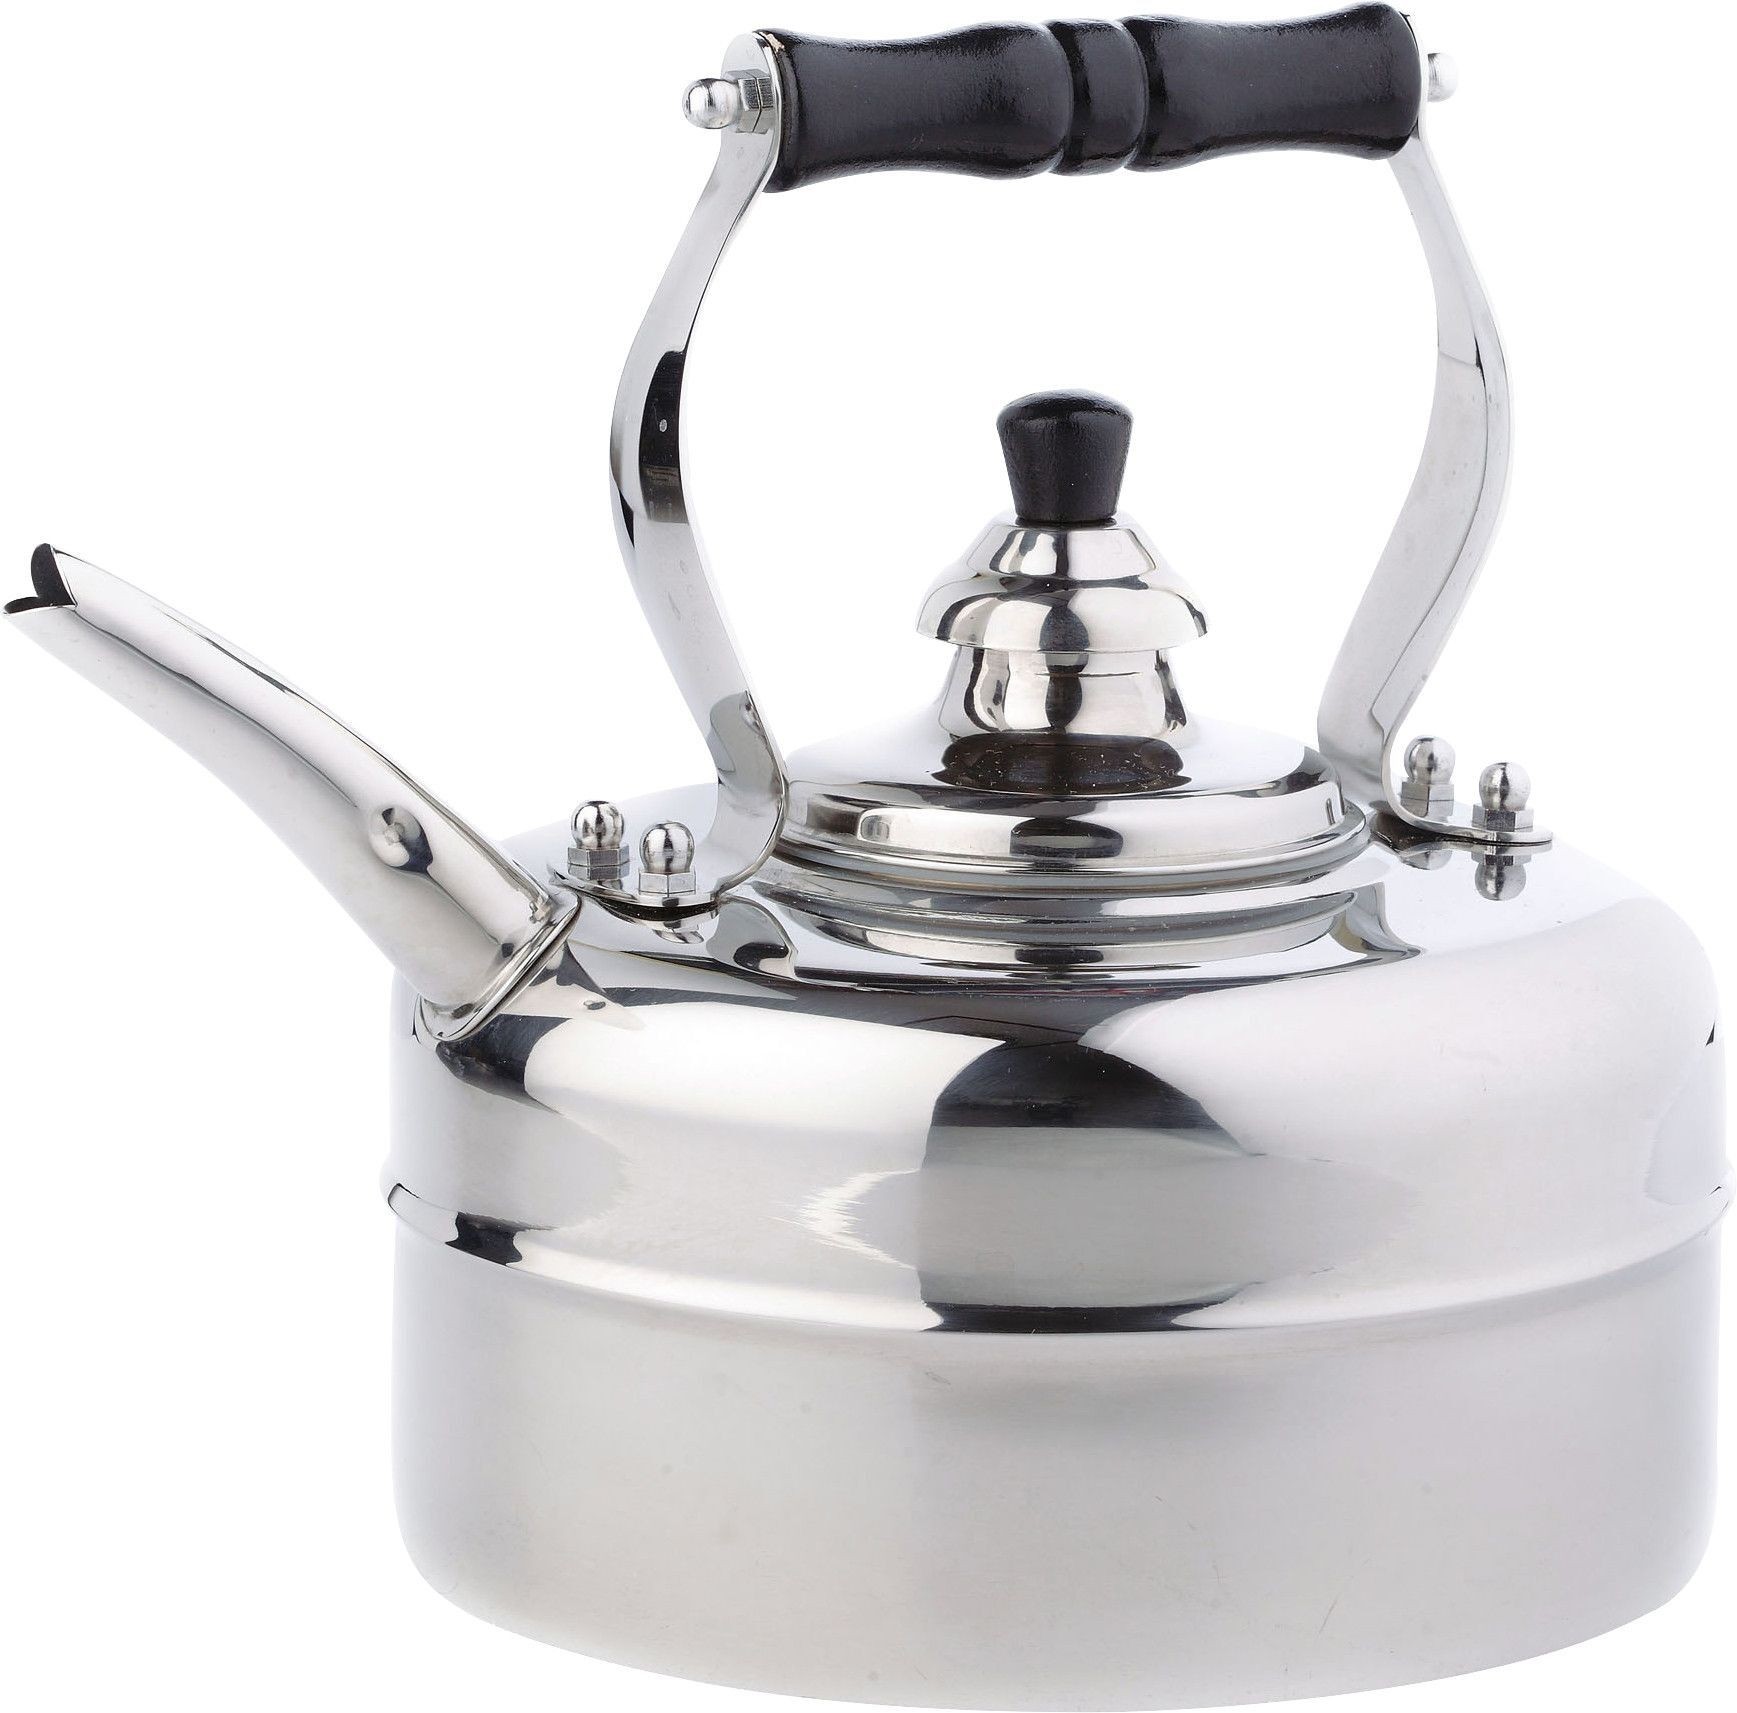 https://foter.com/photos/401/3-quarts-stainless-steel-ols-style-tea-kettle.jpeg